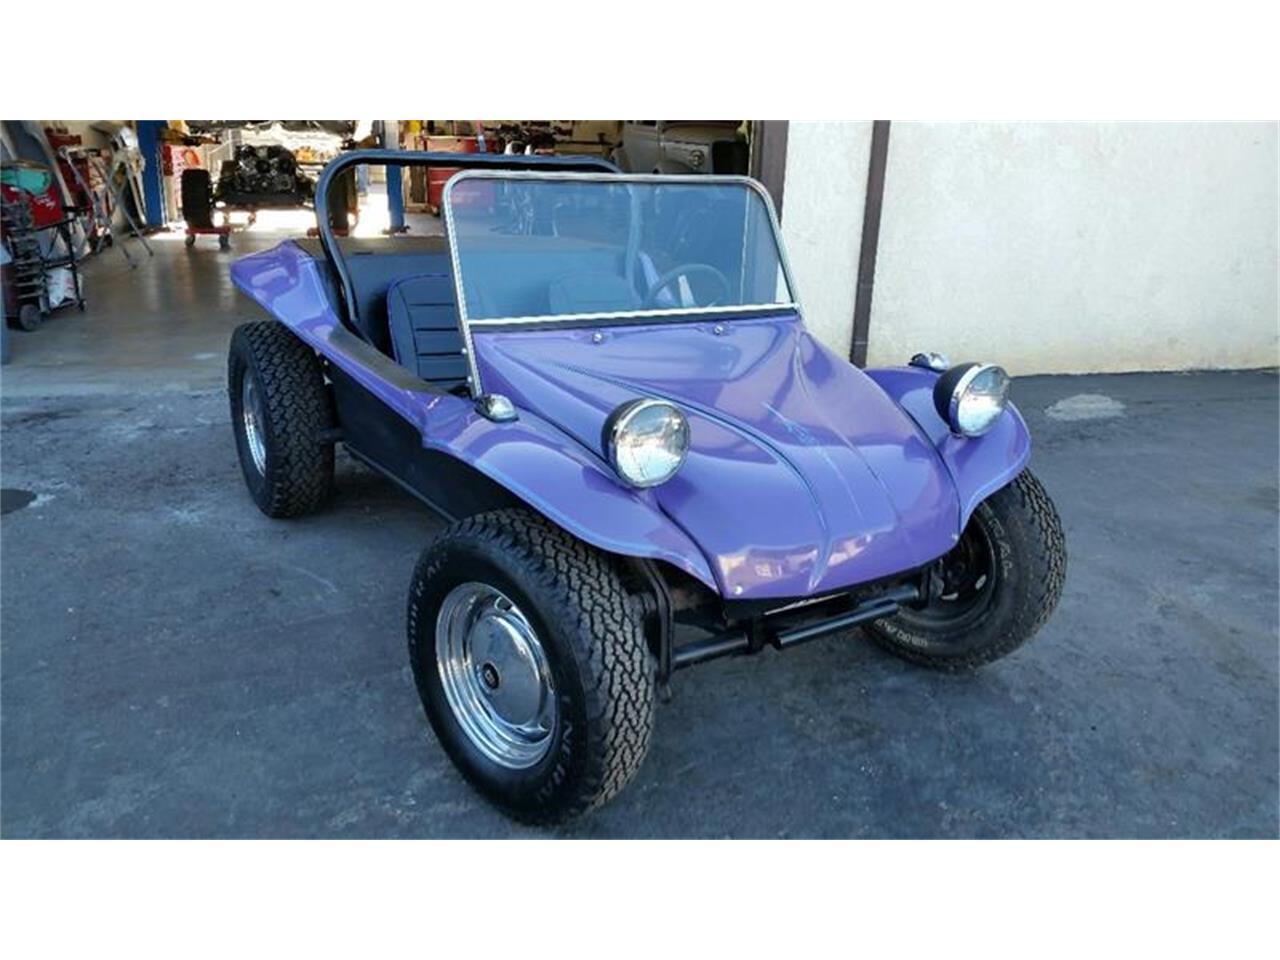 dune buggy motors for sale